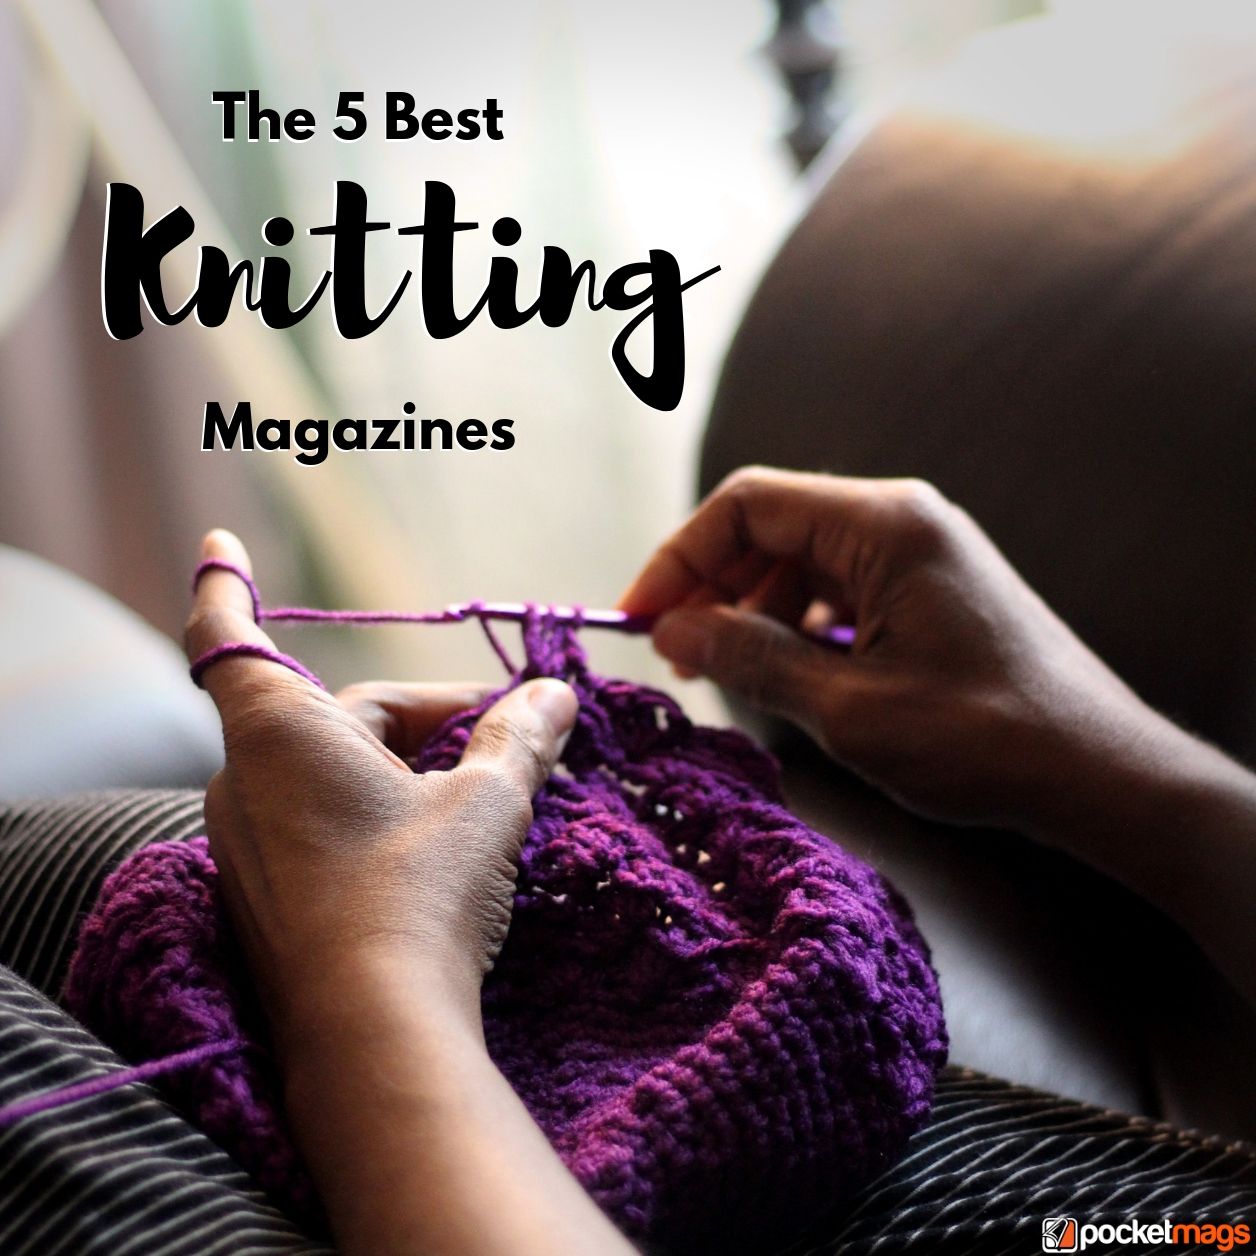 The 5 Best Knitting Magazines